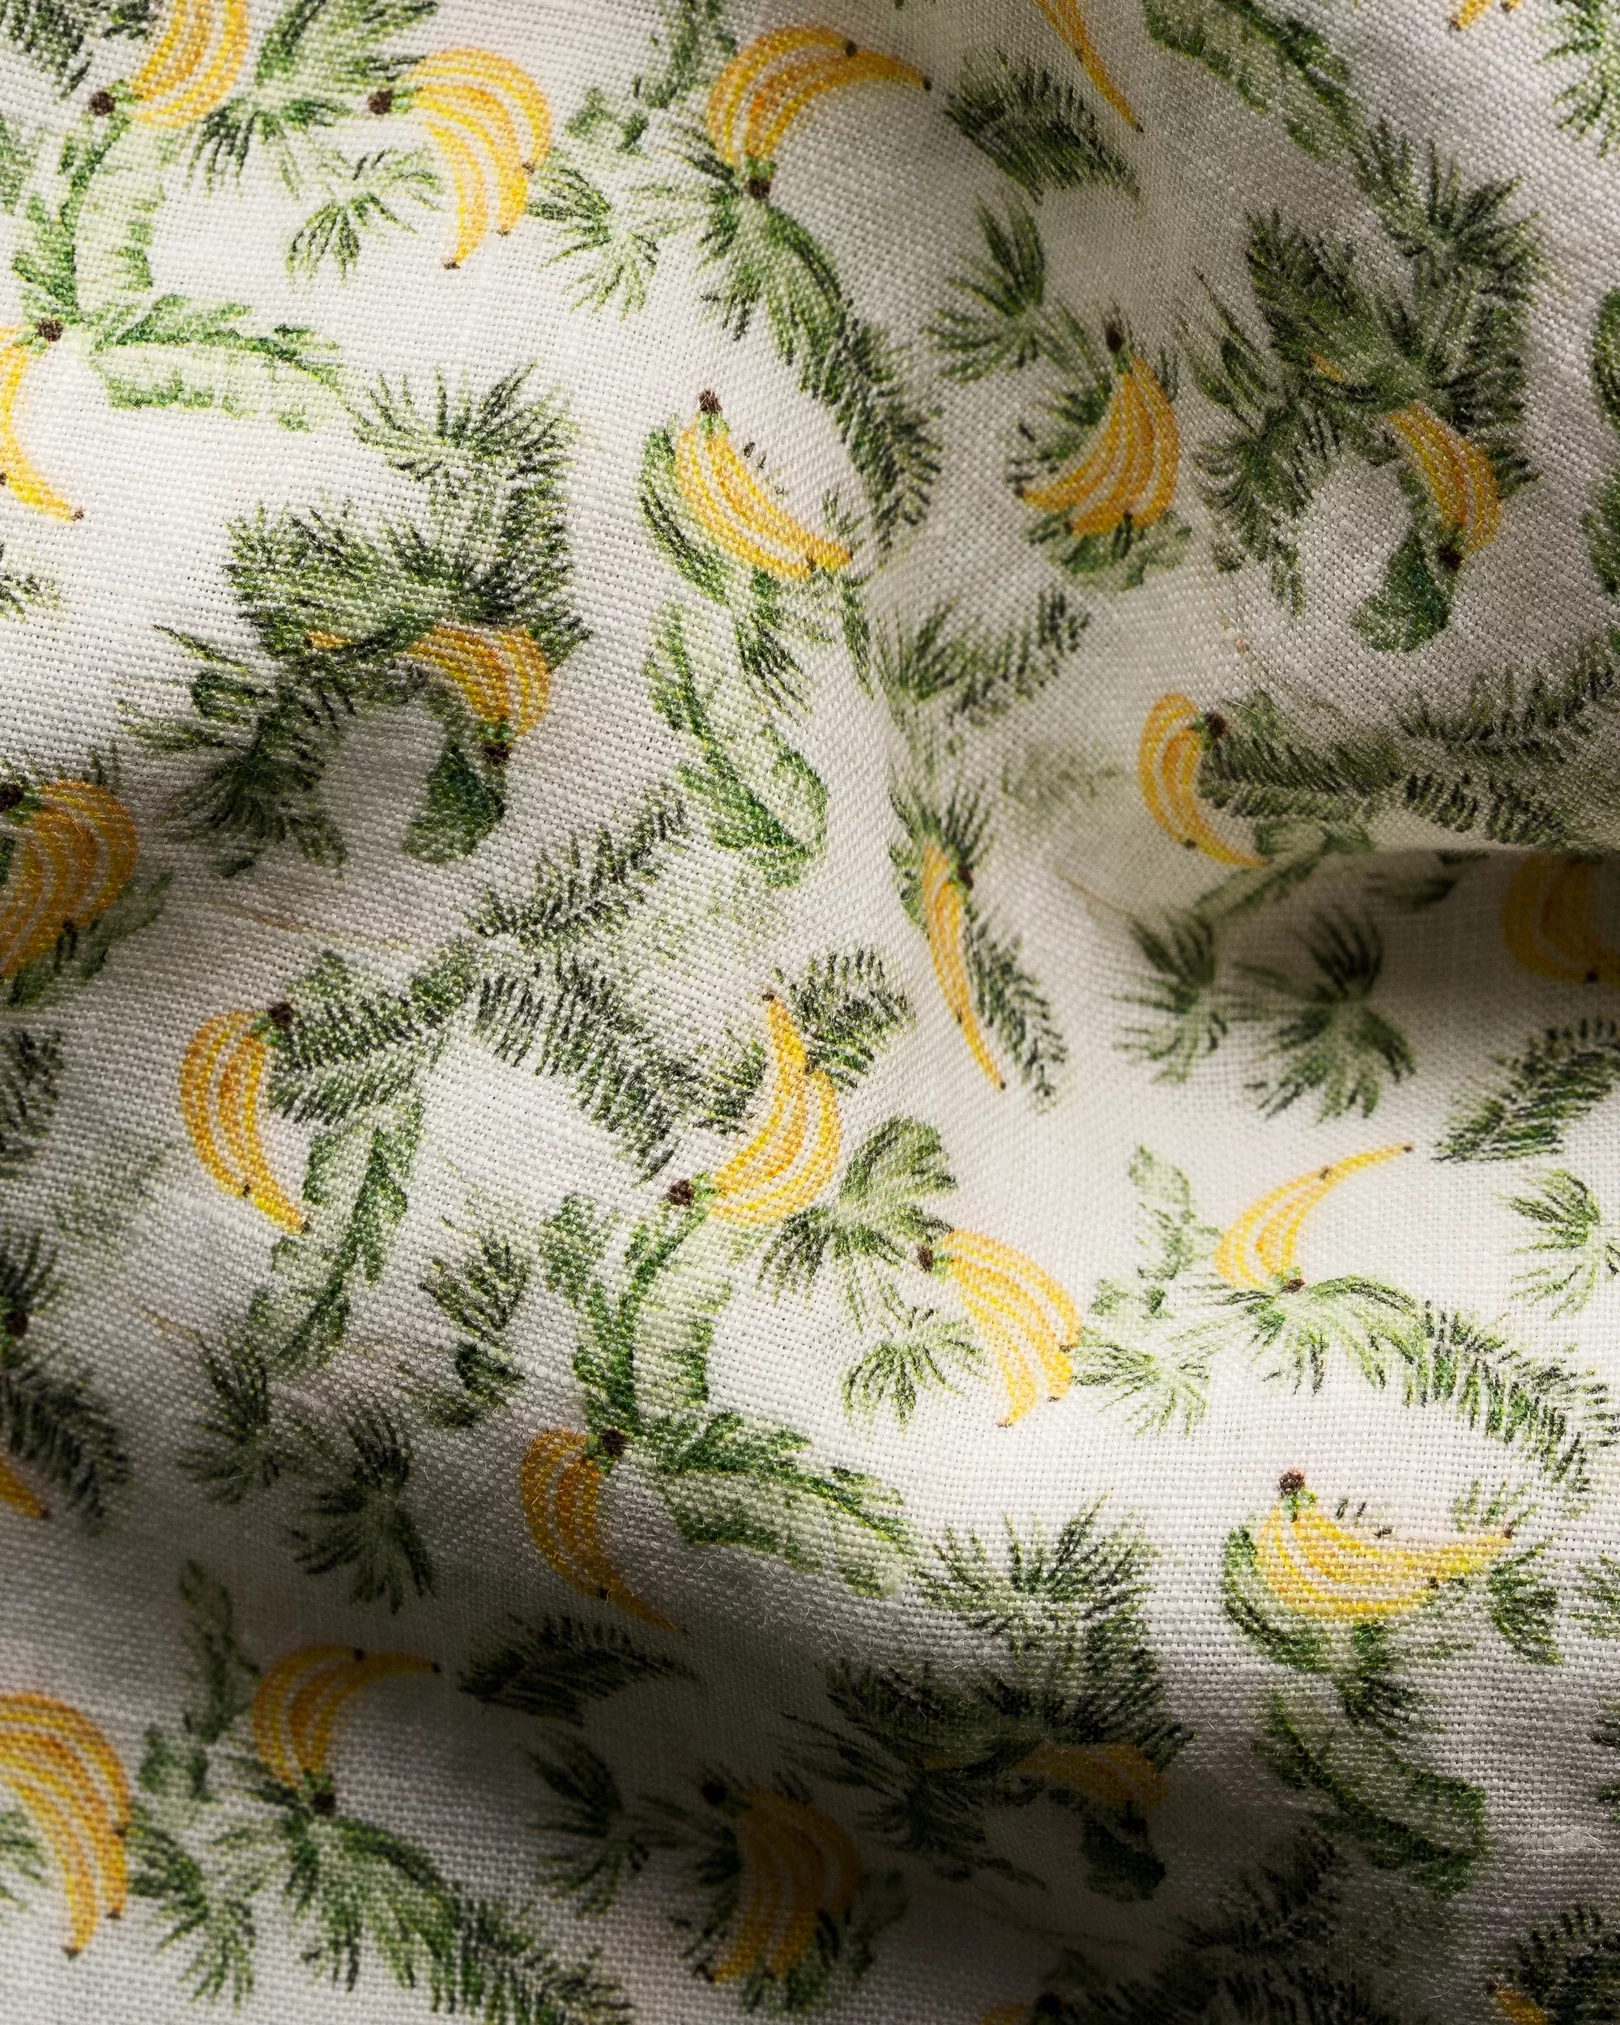 Eton - Green Banana Print Linen Shirt